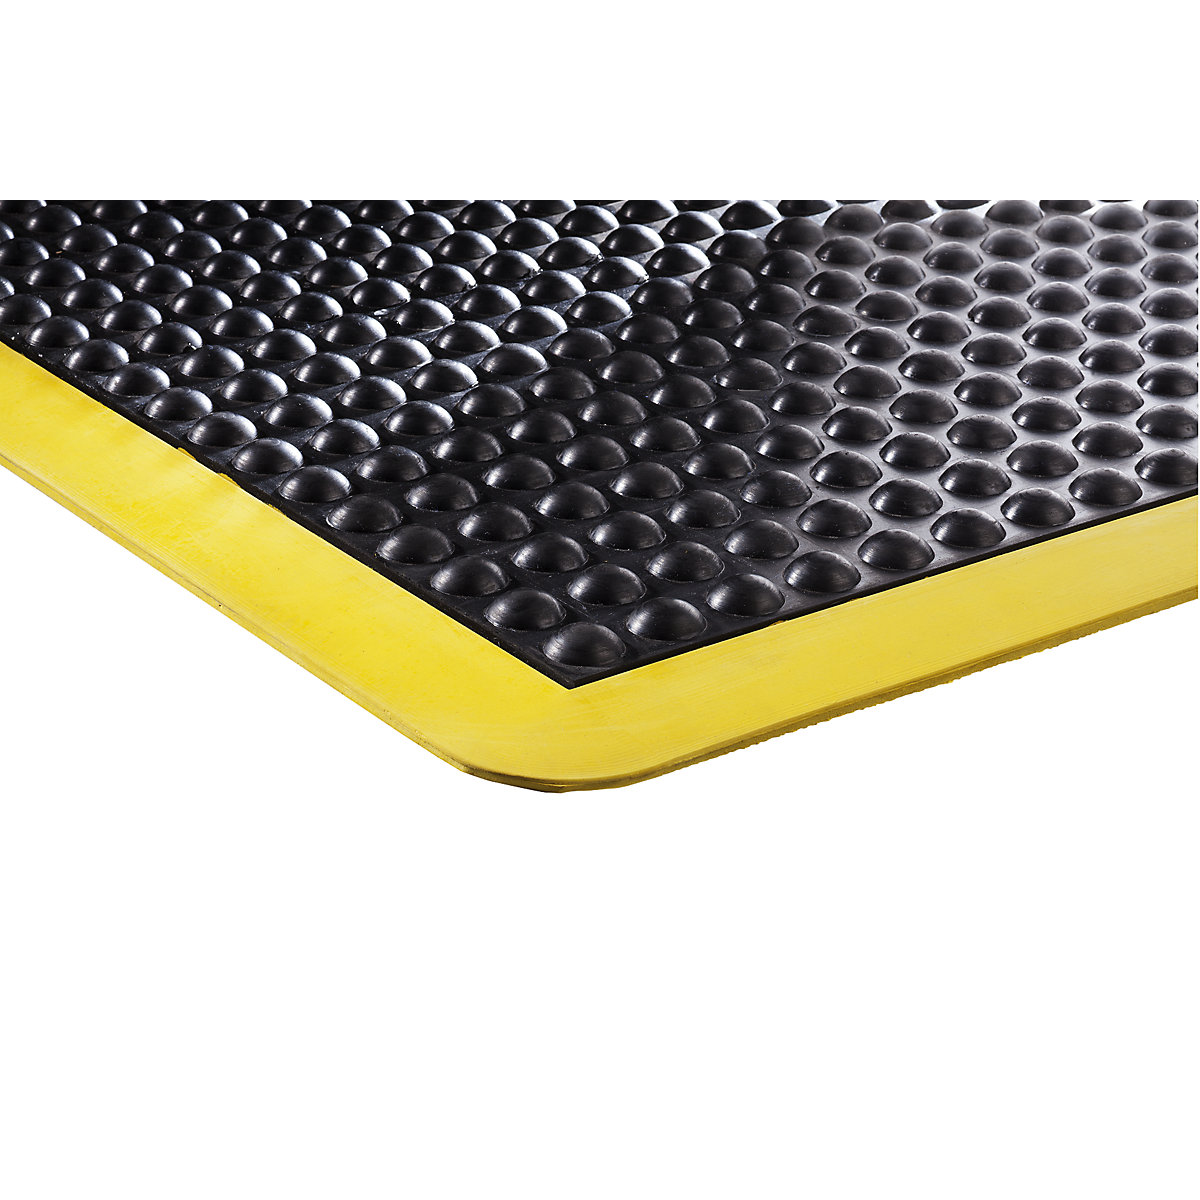 Bubblemat safety anti-fatigue matting - COBA